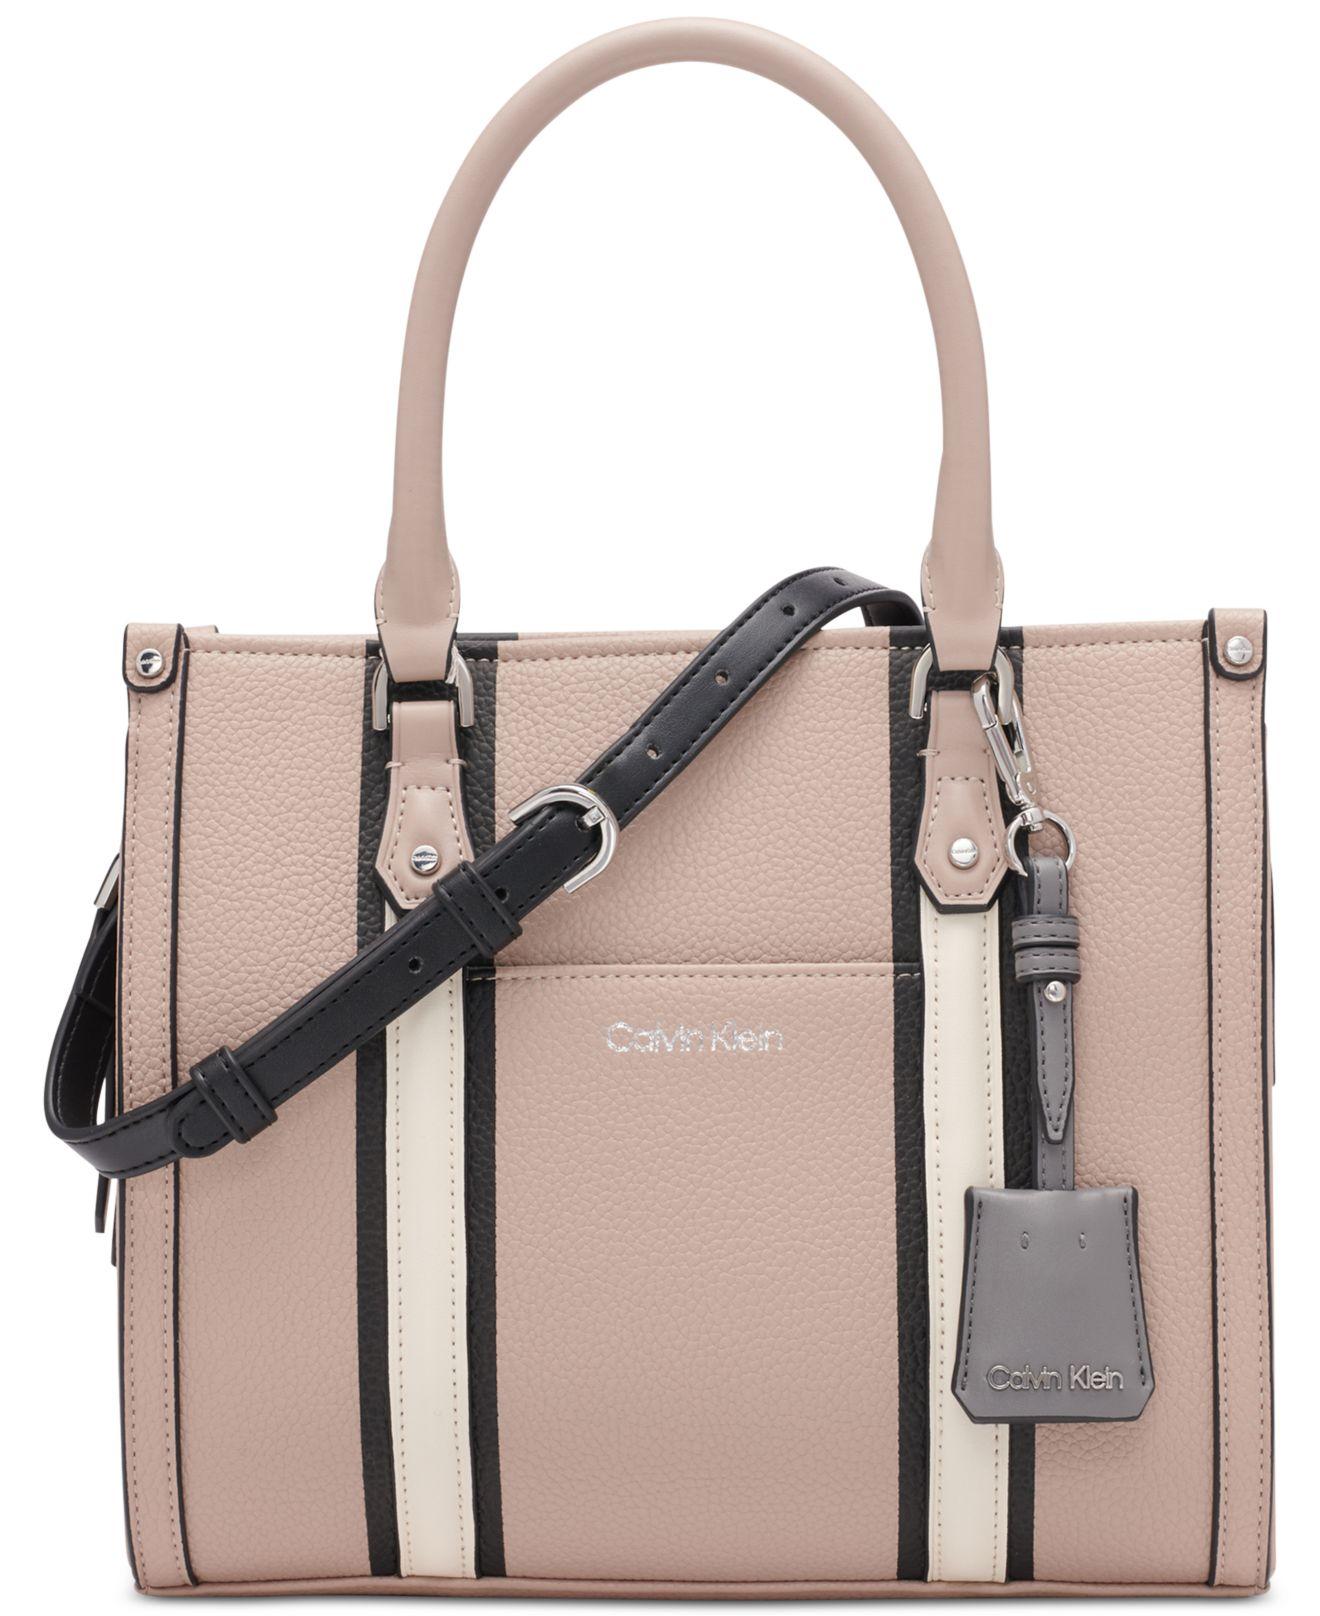 Tan & Beige Calvin Klein Handbags and Accessories - Macy's